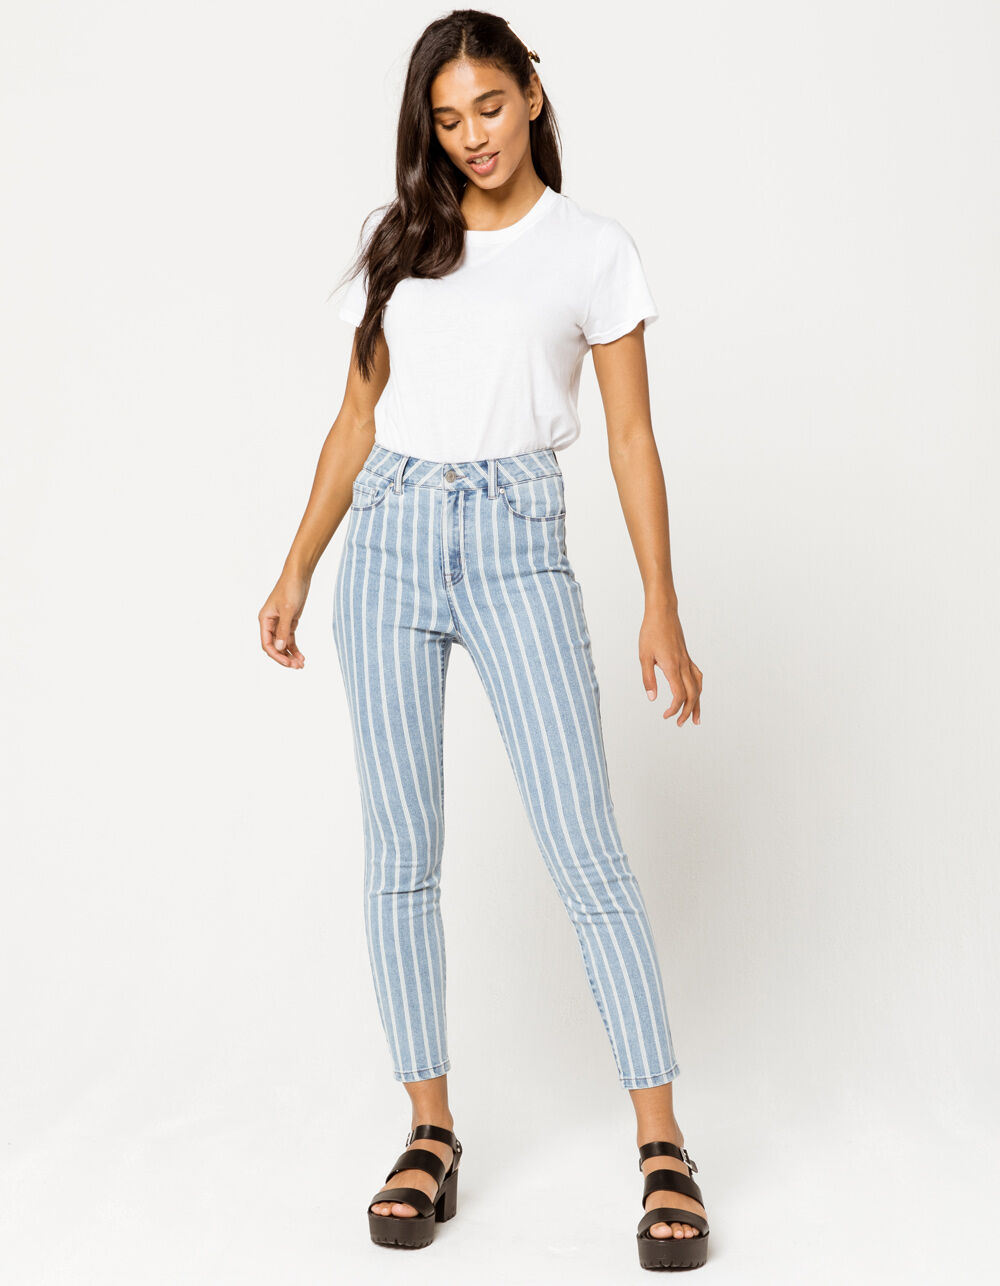 SKY AND SPARROW Stripe Skinny Crop Womens Jeans - MEDIUM WASH | Tillys